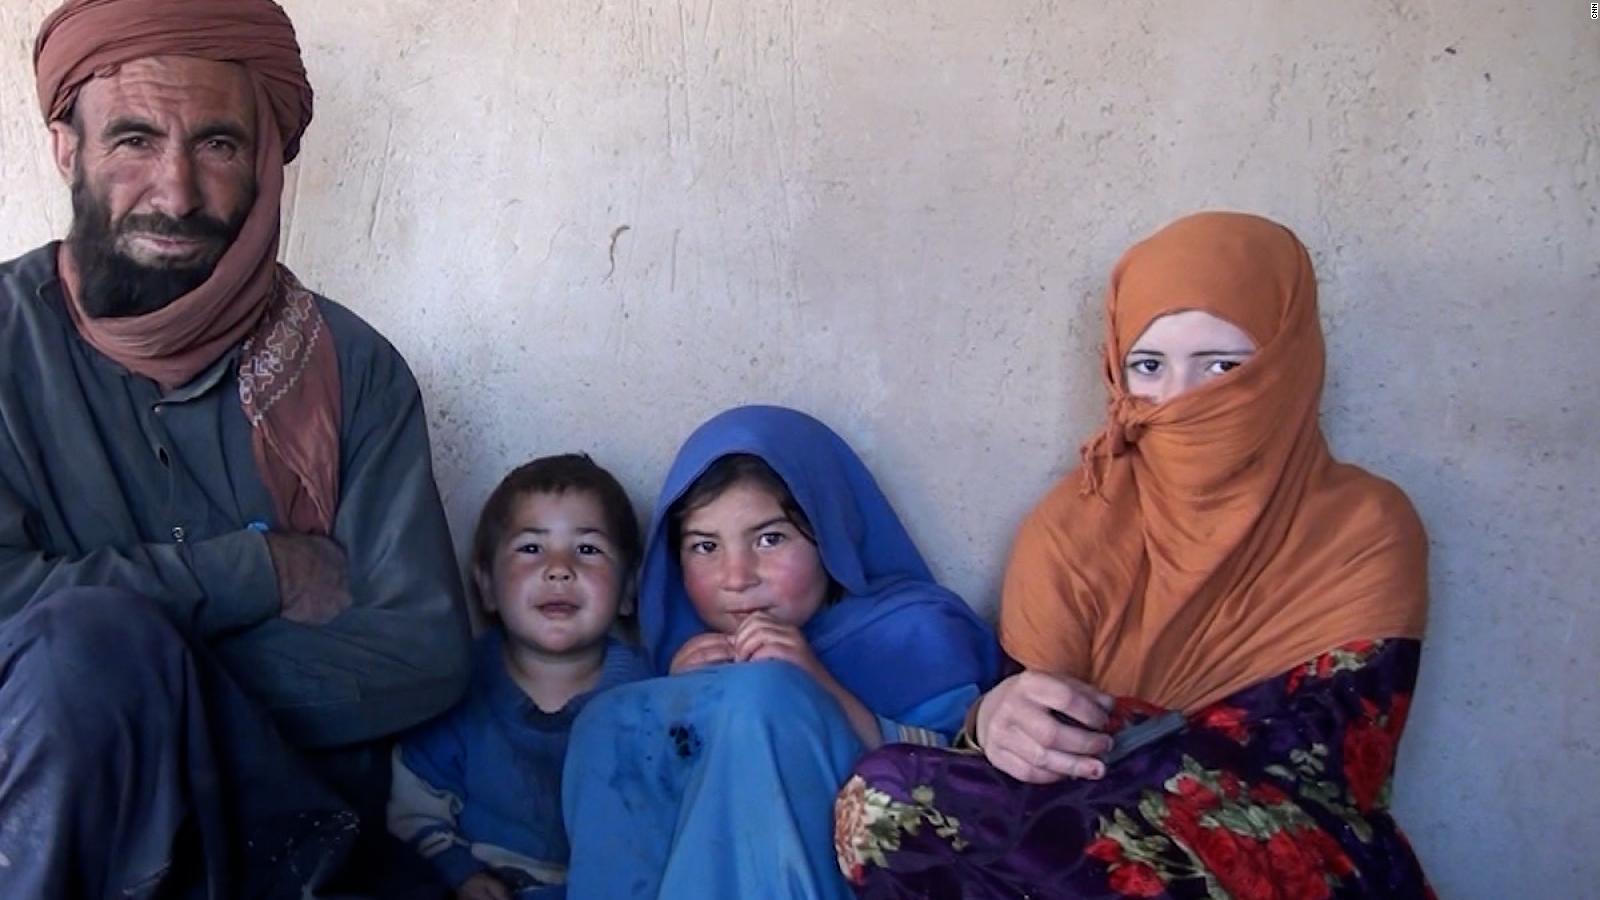 familias en afganistan venden a sus hijas mas pequenas tras desesperante situacion economica laverdaddemonagas.com 211101174400 coren pkg afghan girls 1 full 169